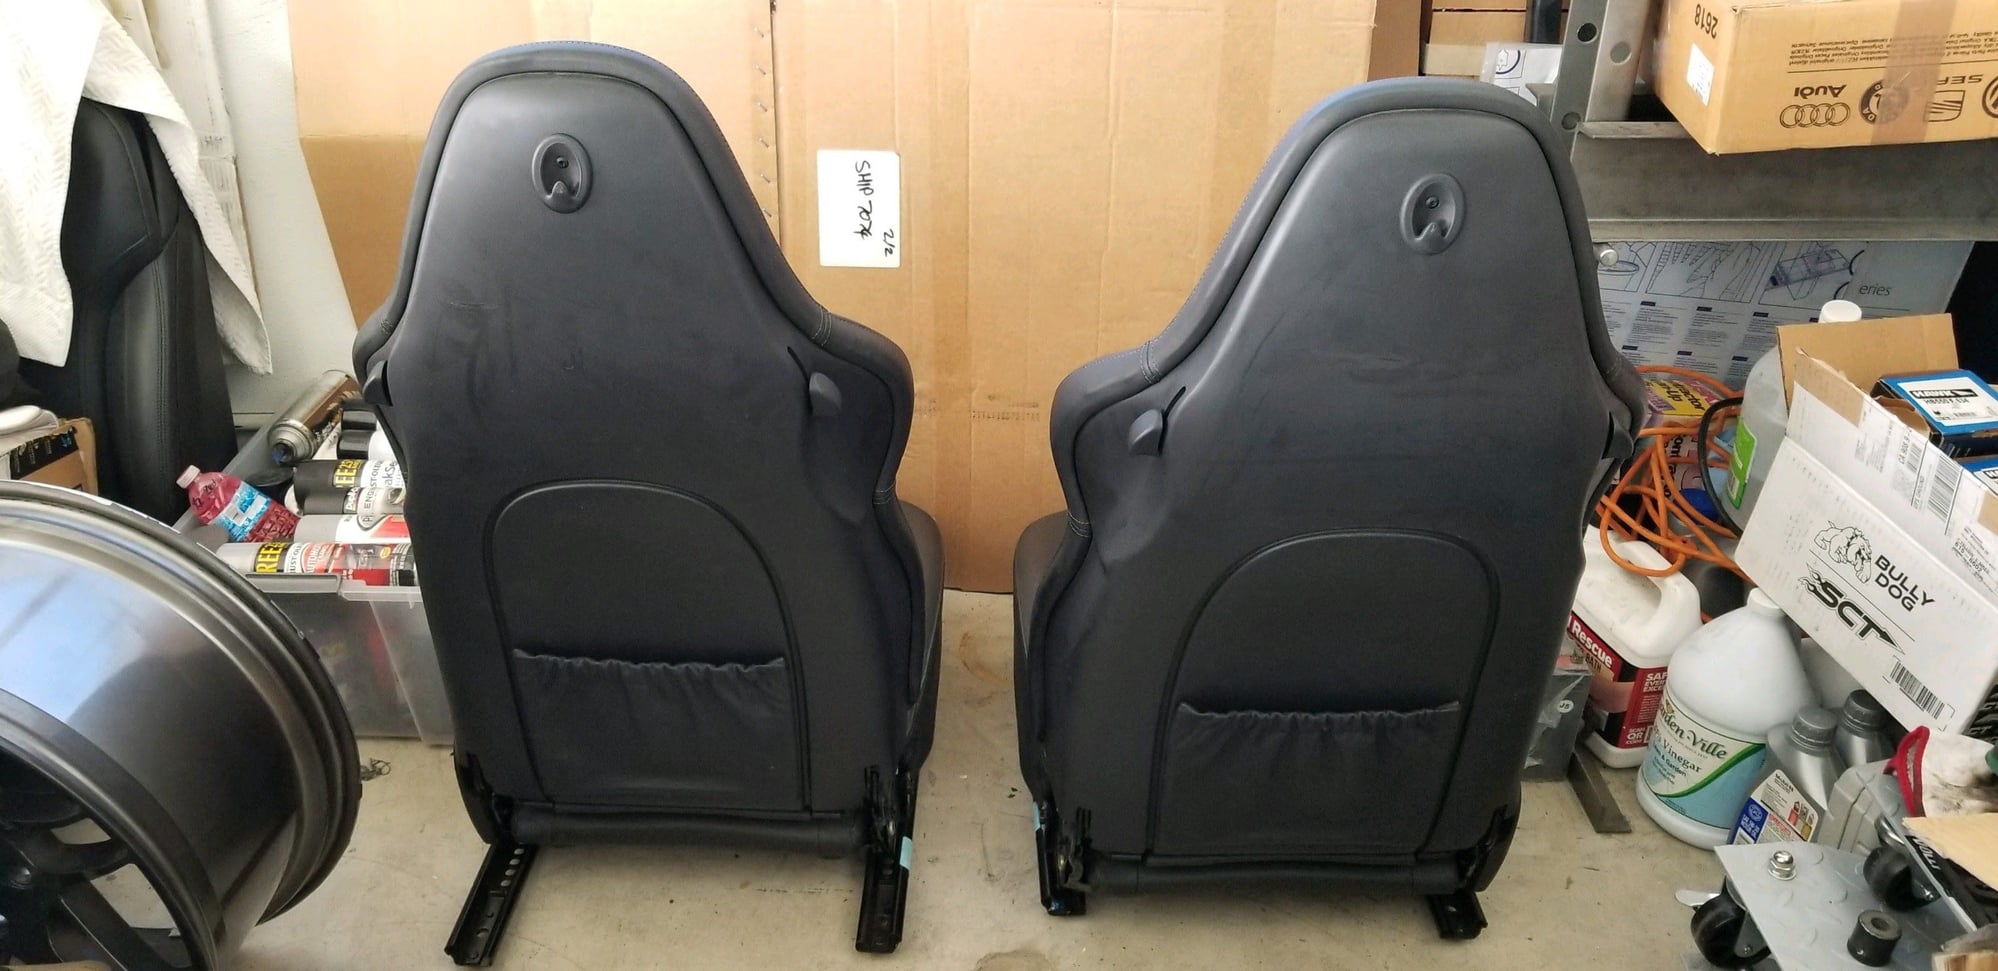 Interior/Upholstery - Hard Back Sports seats - $2,500 - SoCal - Used - Rancho Palos Verdes, CA 90275, United States